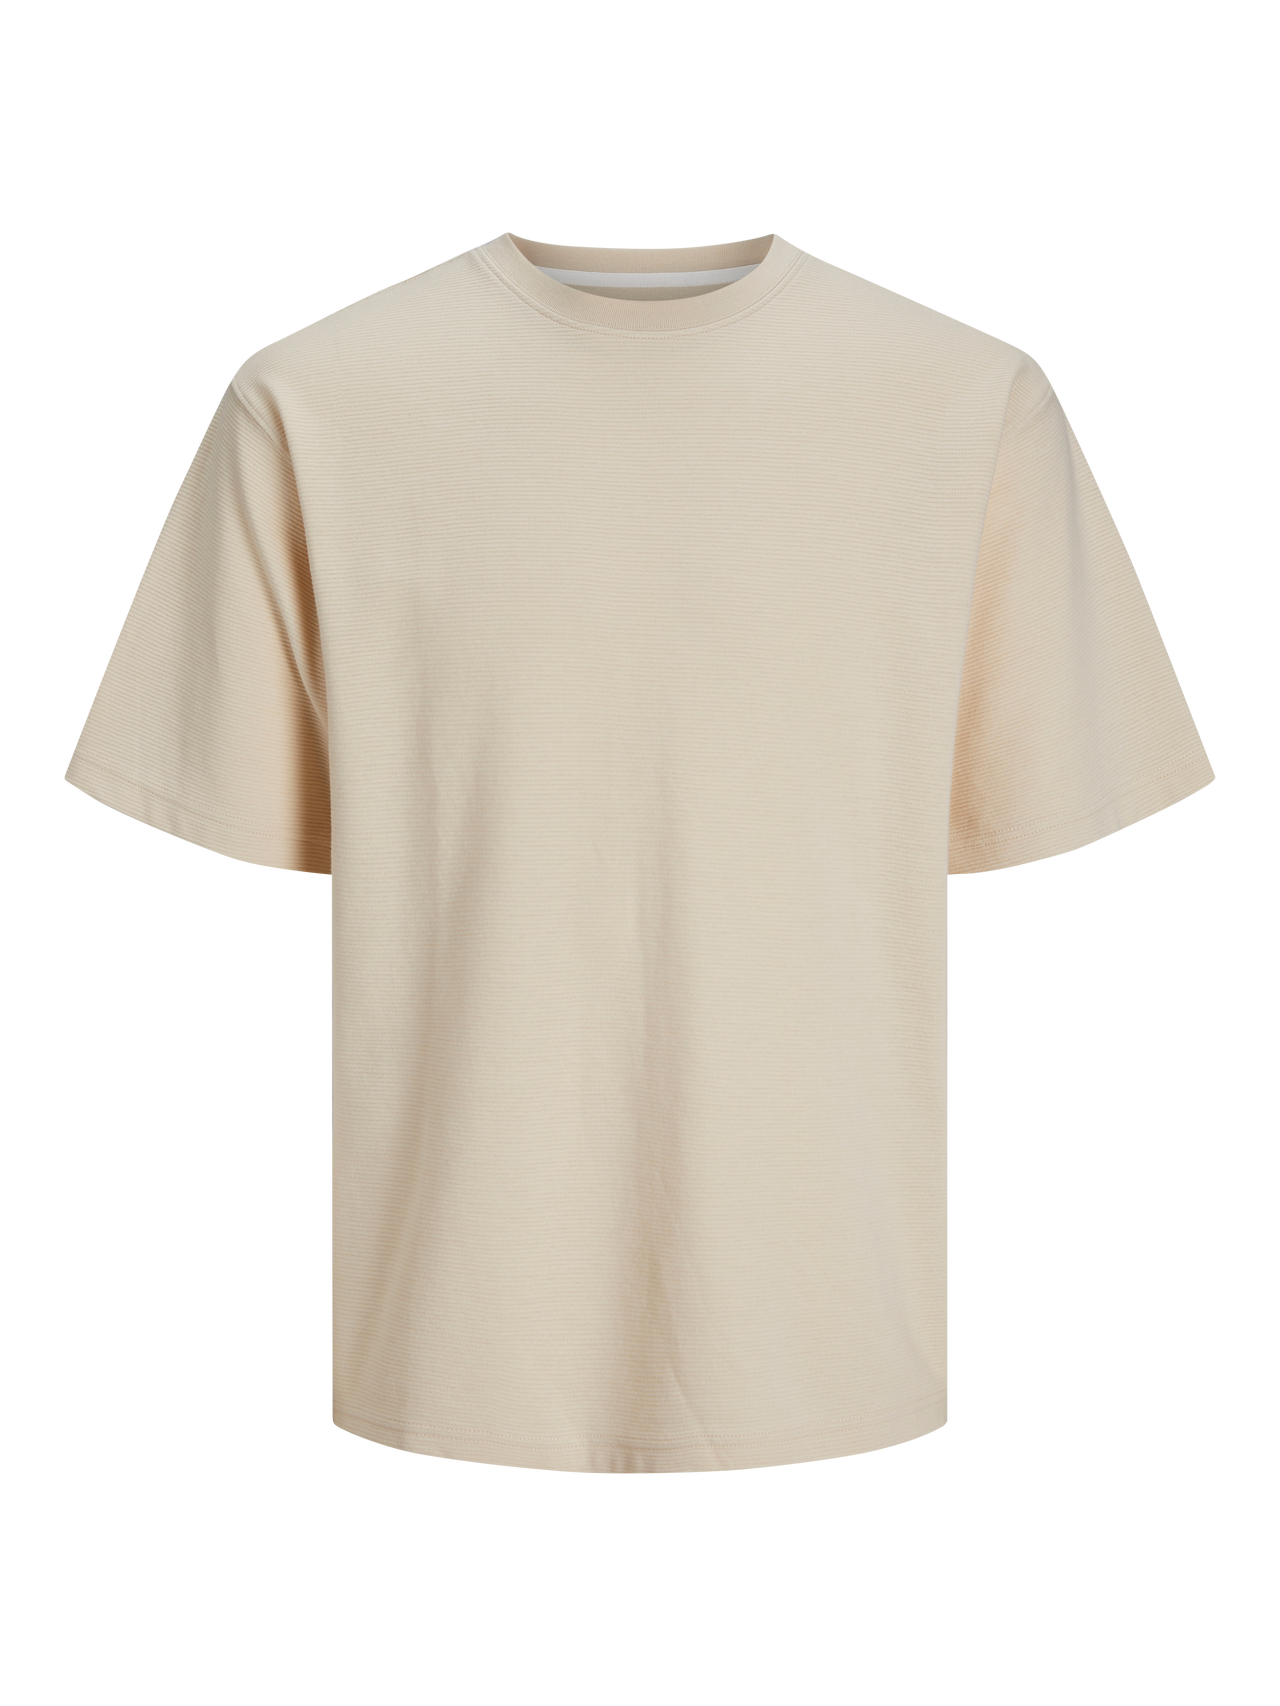 Jack & Jones American Fit Crew neck T-Shirt -Summer Sand - 12255539